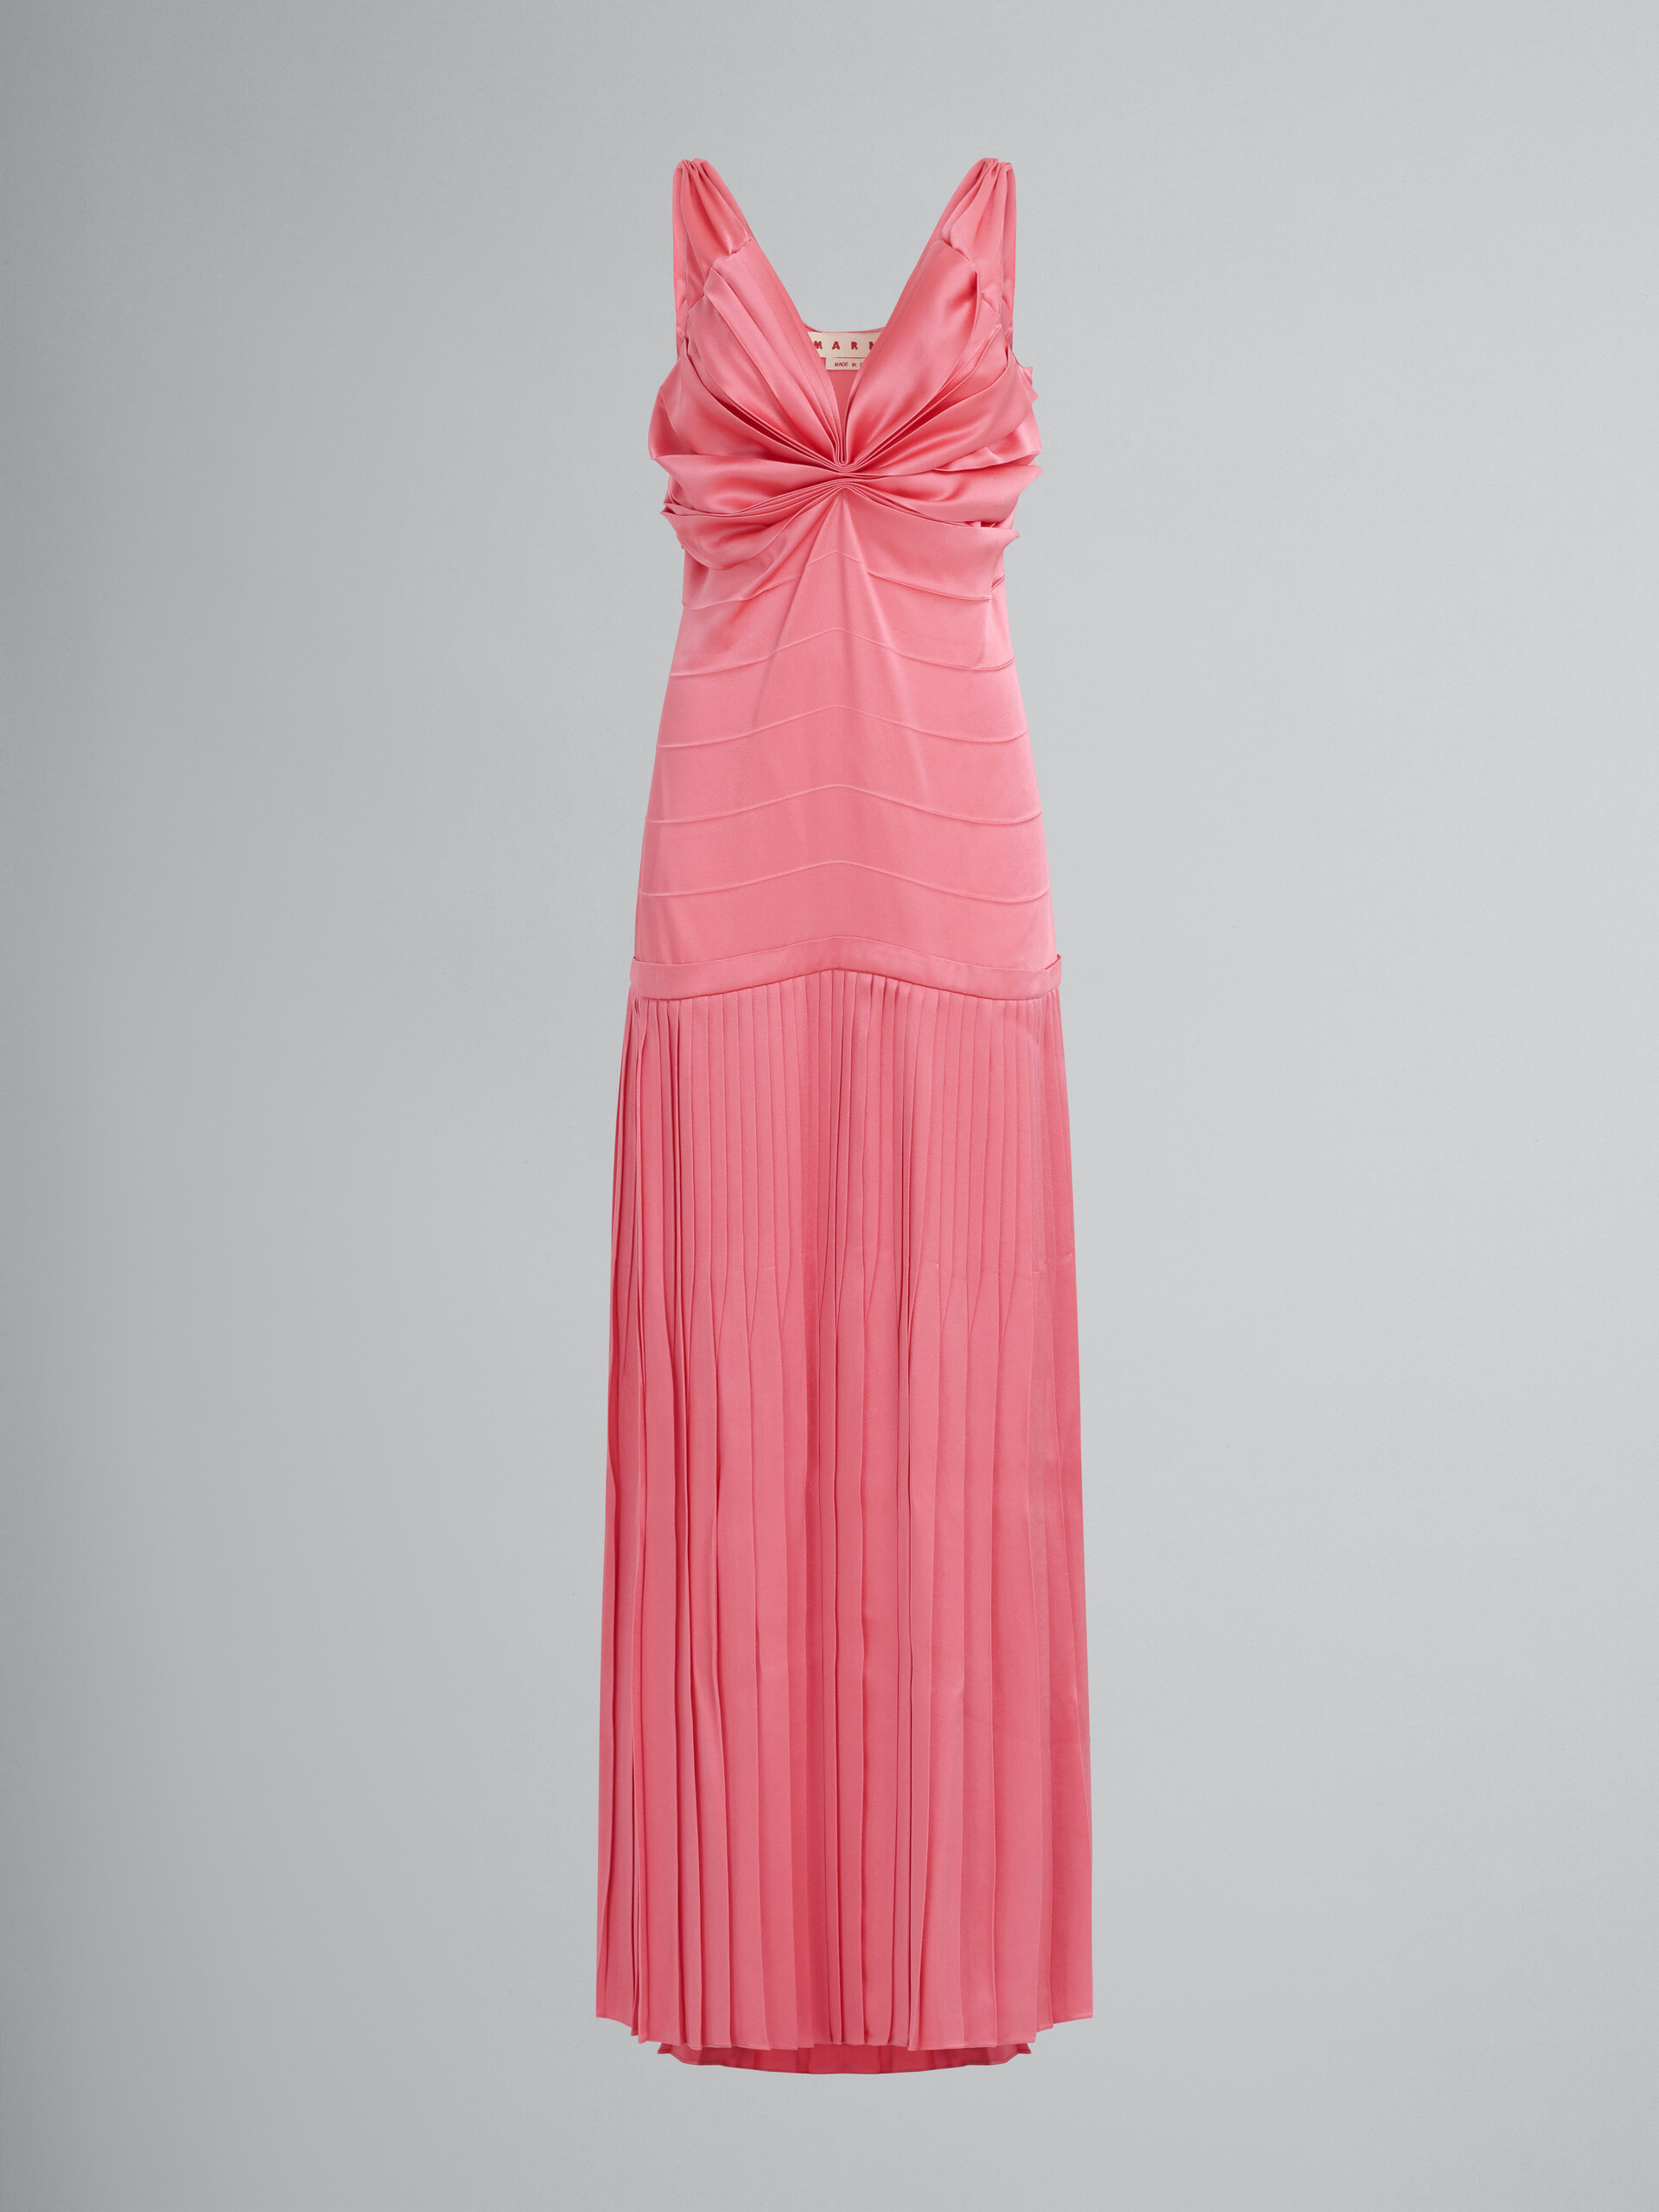 Draped long dress in pink crêpe satin - Dresses - Image 1